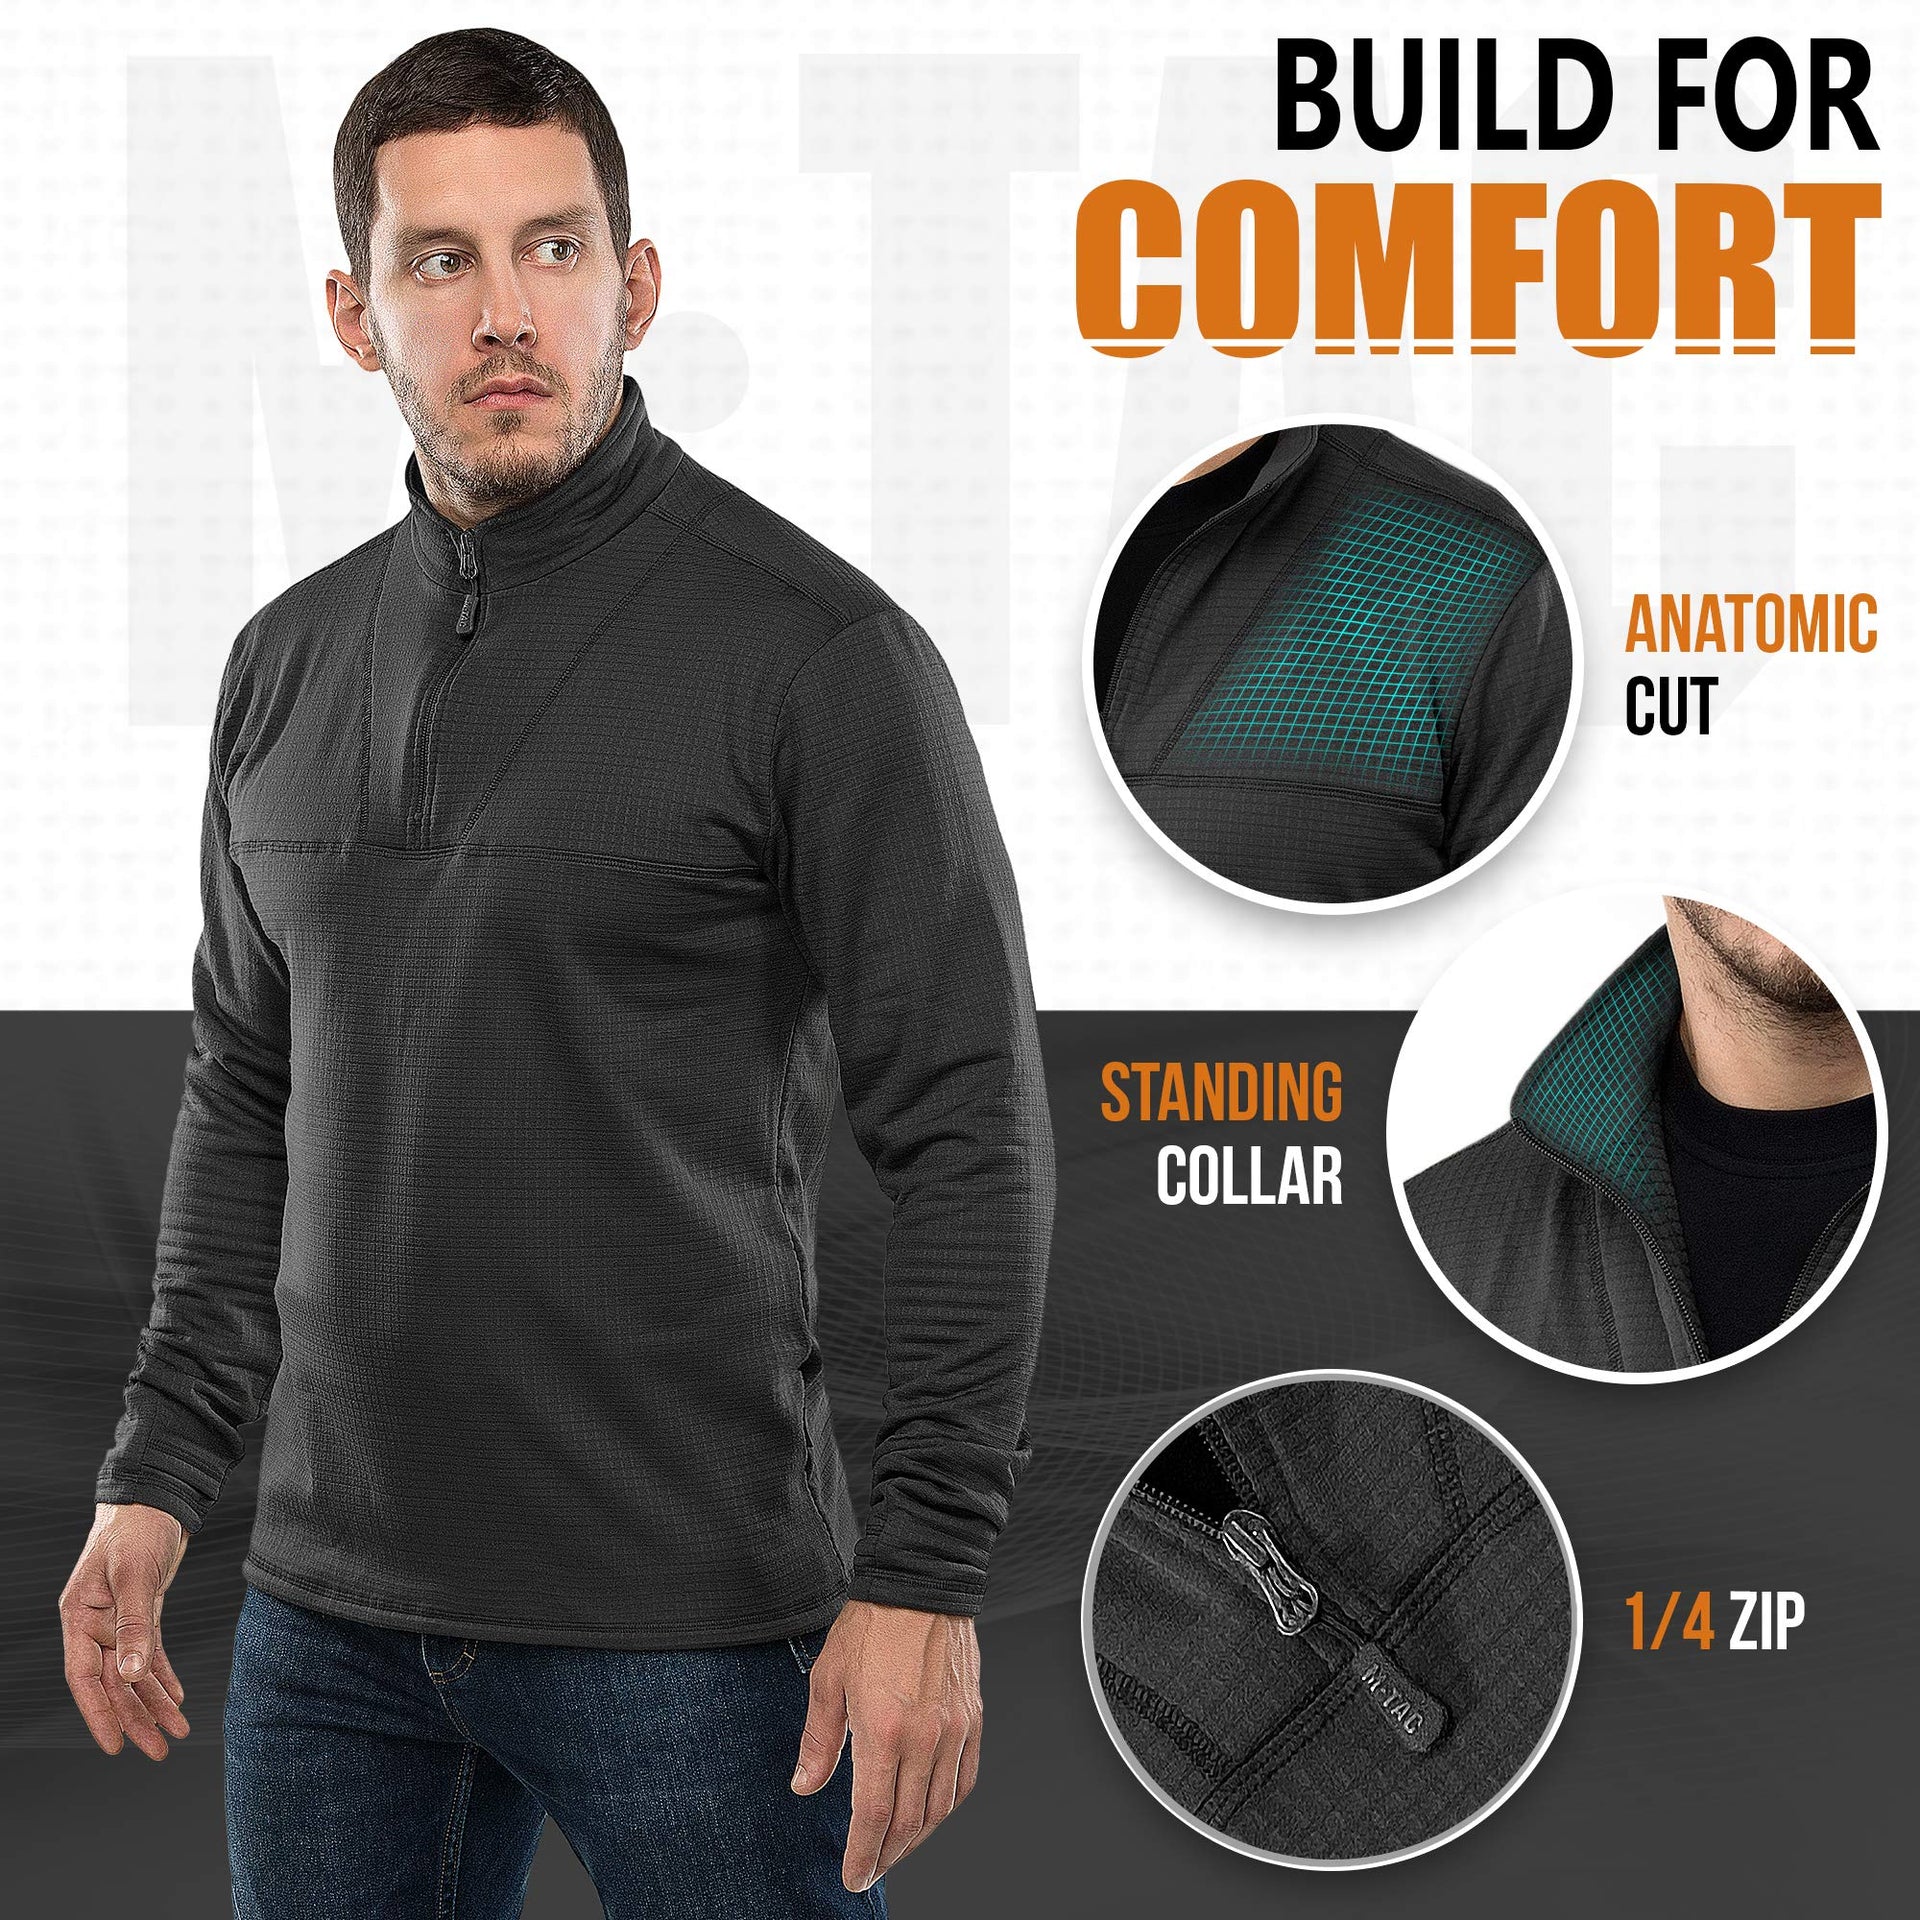 M-Tac Thermal Shirt Fleece Delta Level 2 – M-TAC